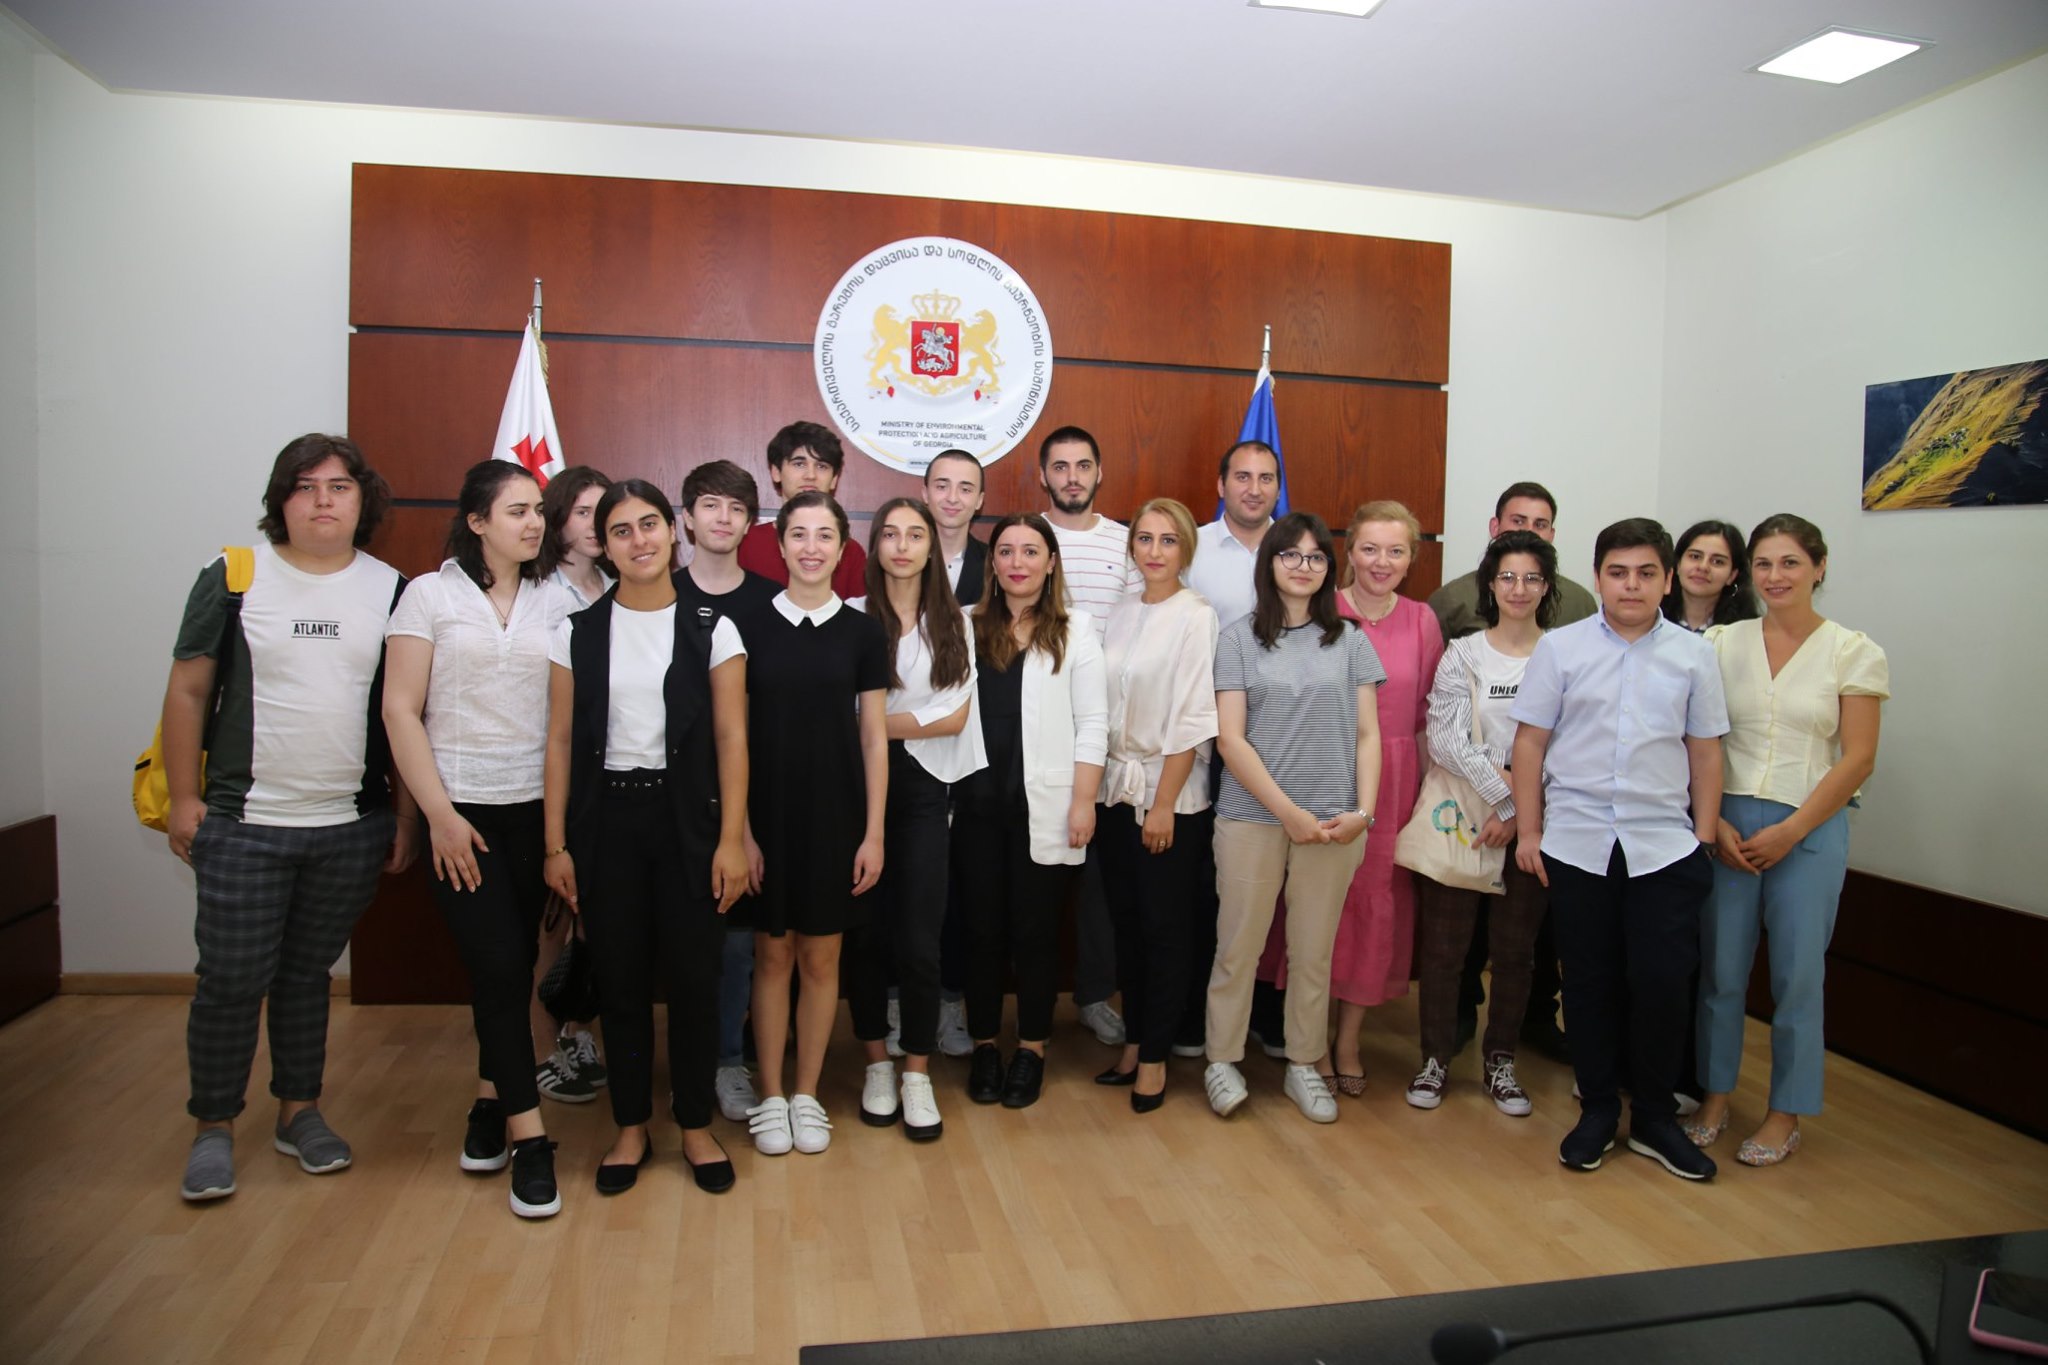  Students of "School of Eco leaders" met with Nino Tandilashvili, Deputy Minister of MEPA